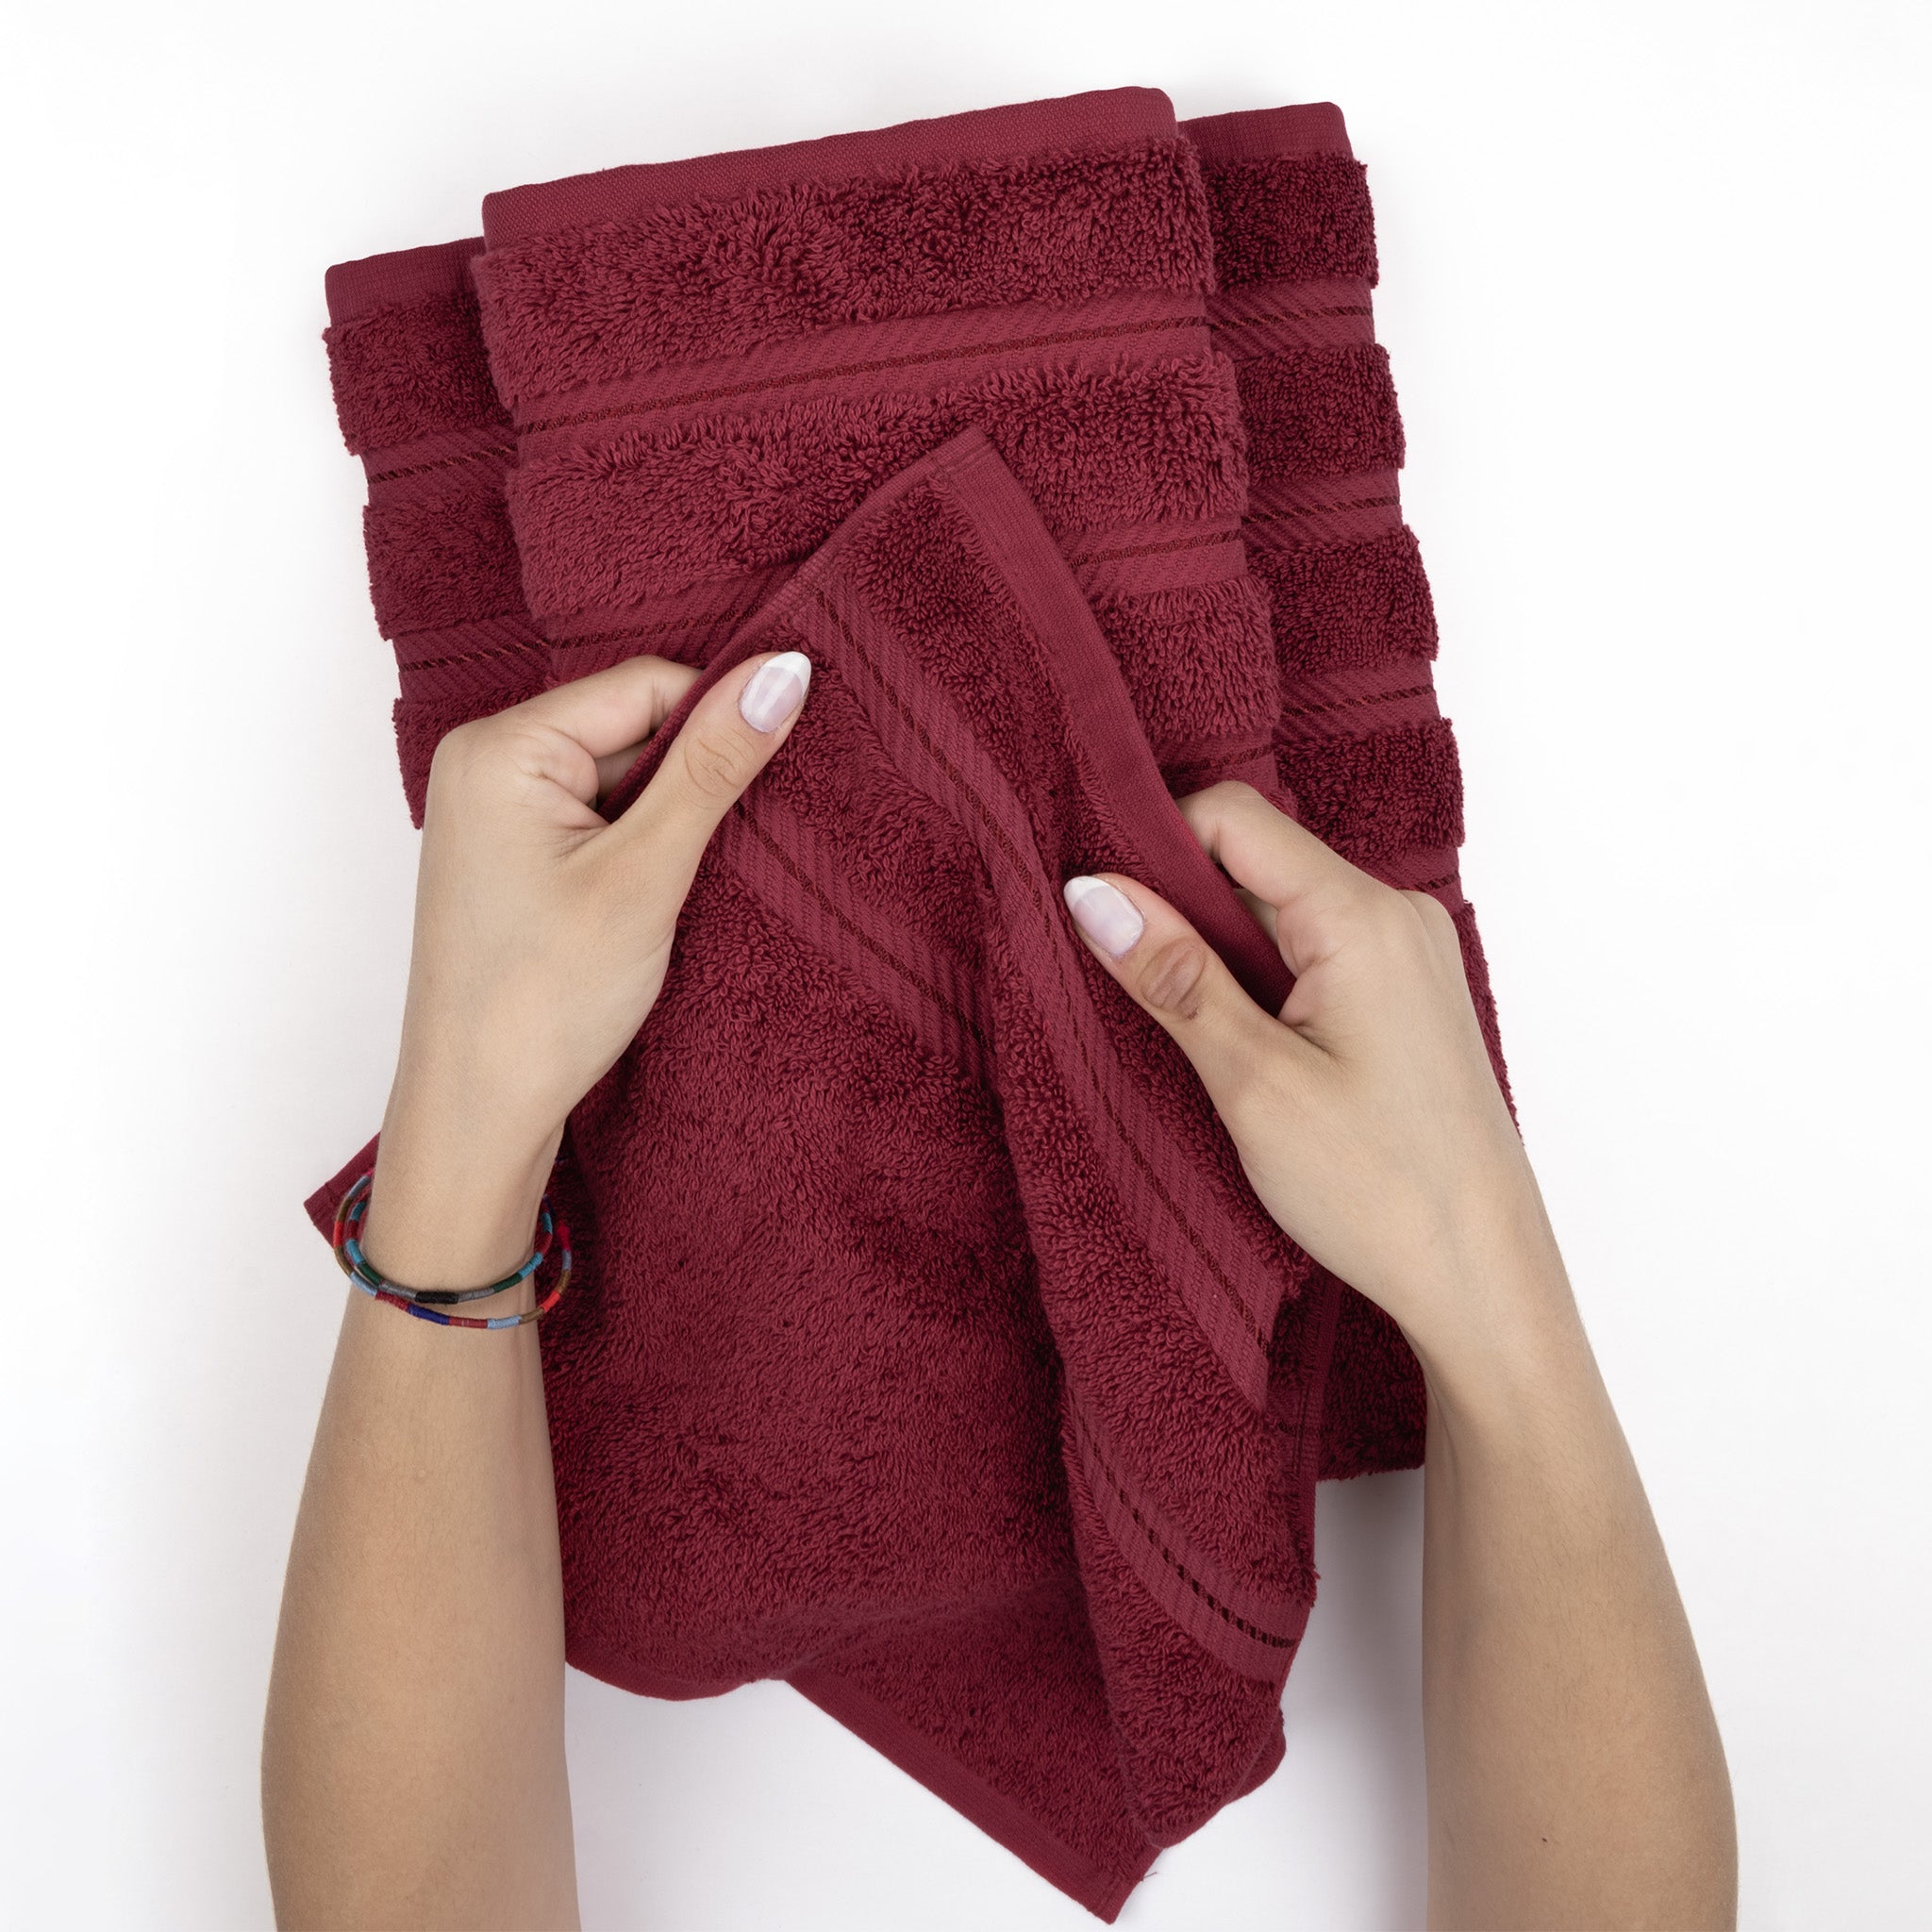 American Soft Linen 35x70 Inch 100% Turkish Cotton Jumbo Bath Sheet bordeaux-red-4